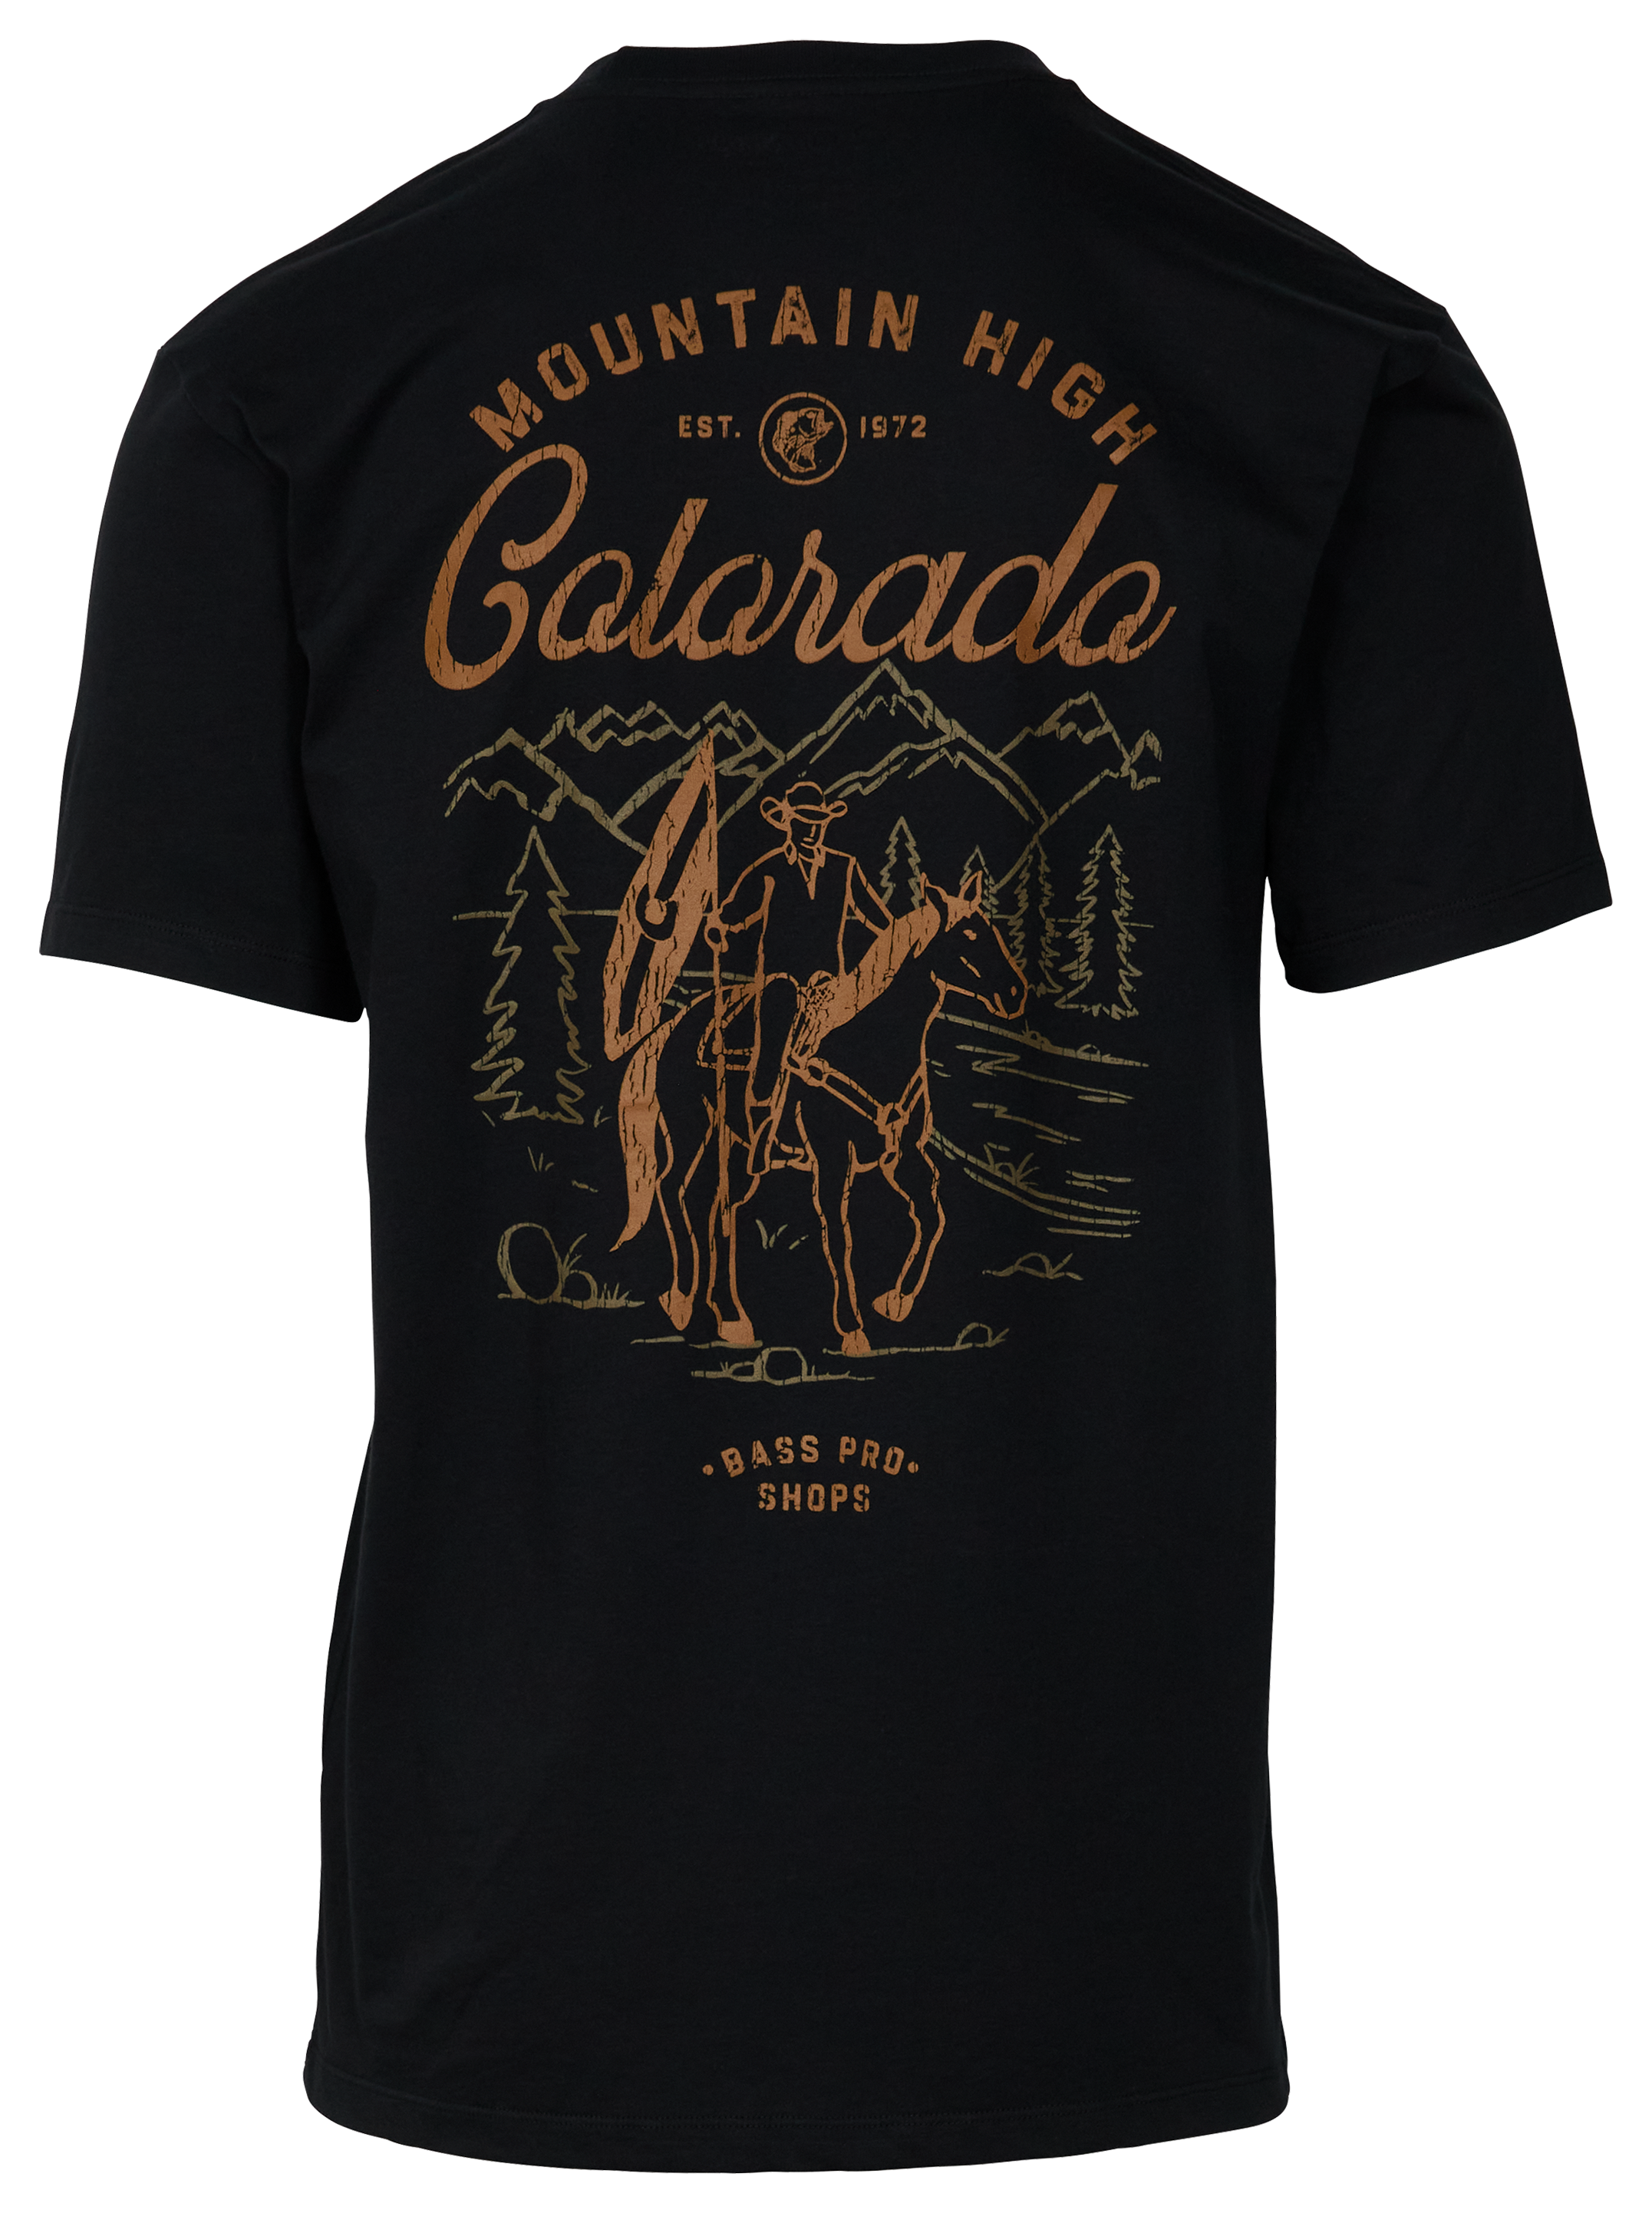 Bass Pro Shops Colorado Mountain High Short-Sleeve T-Shirt for Men